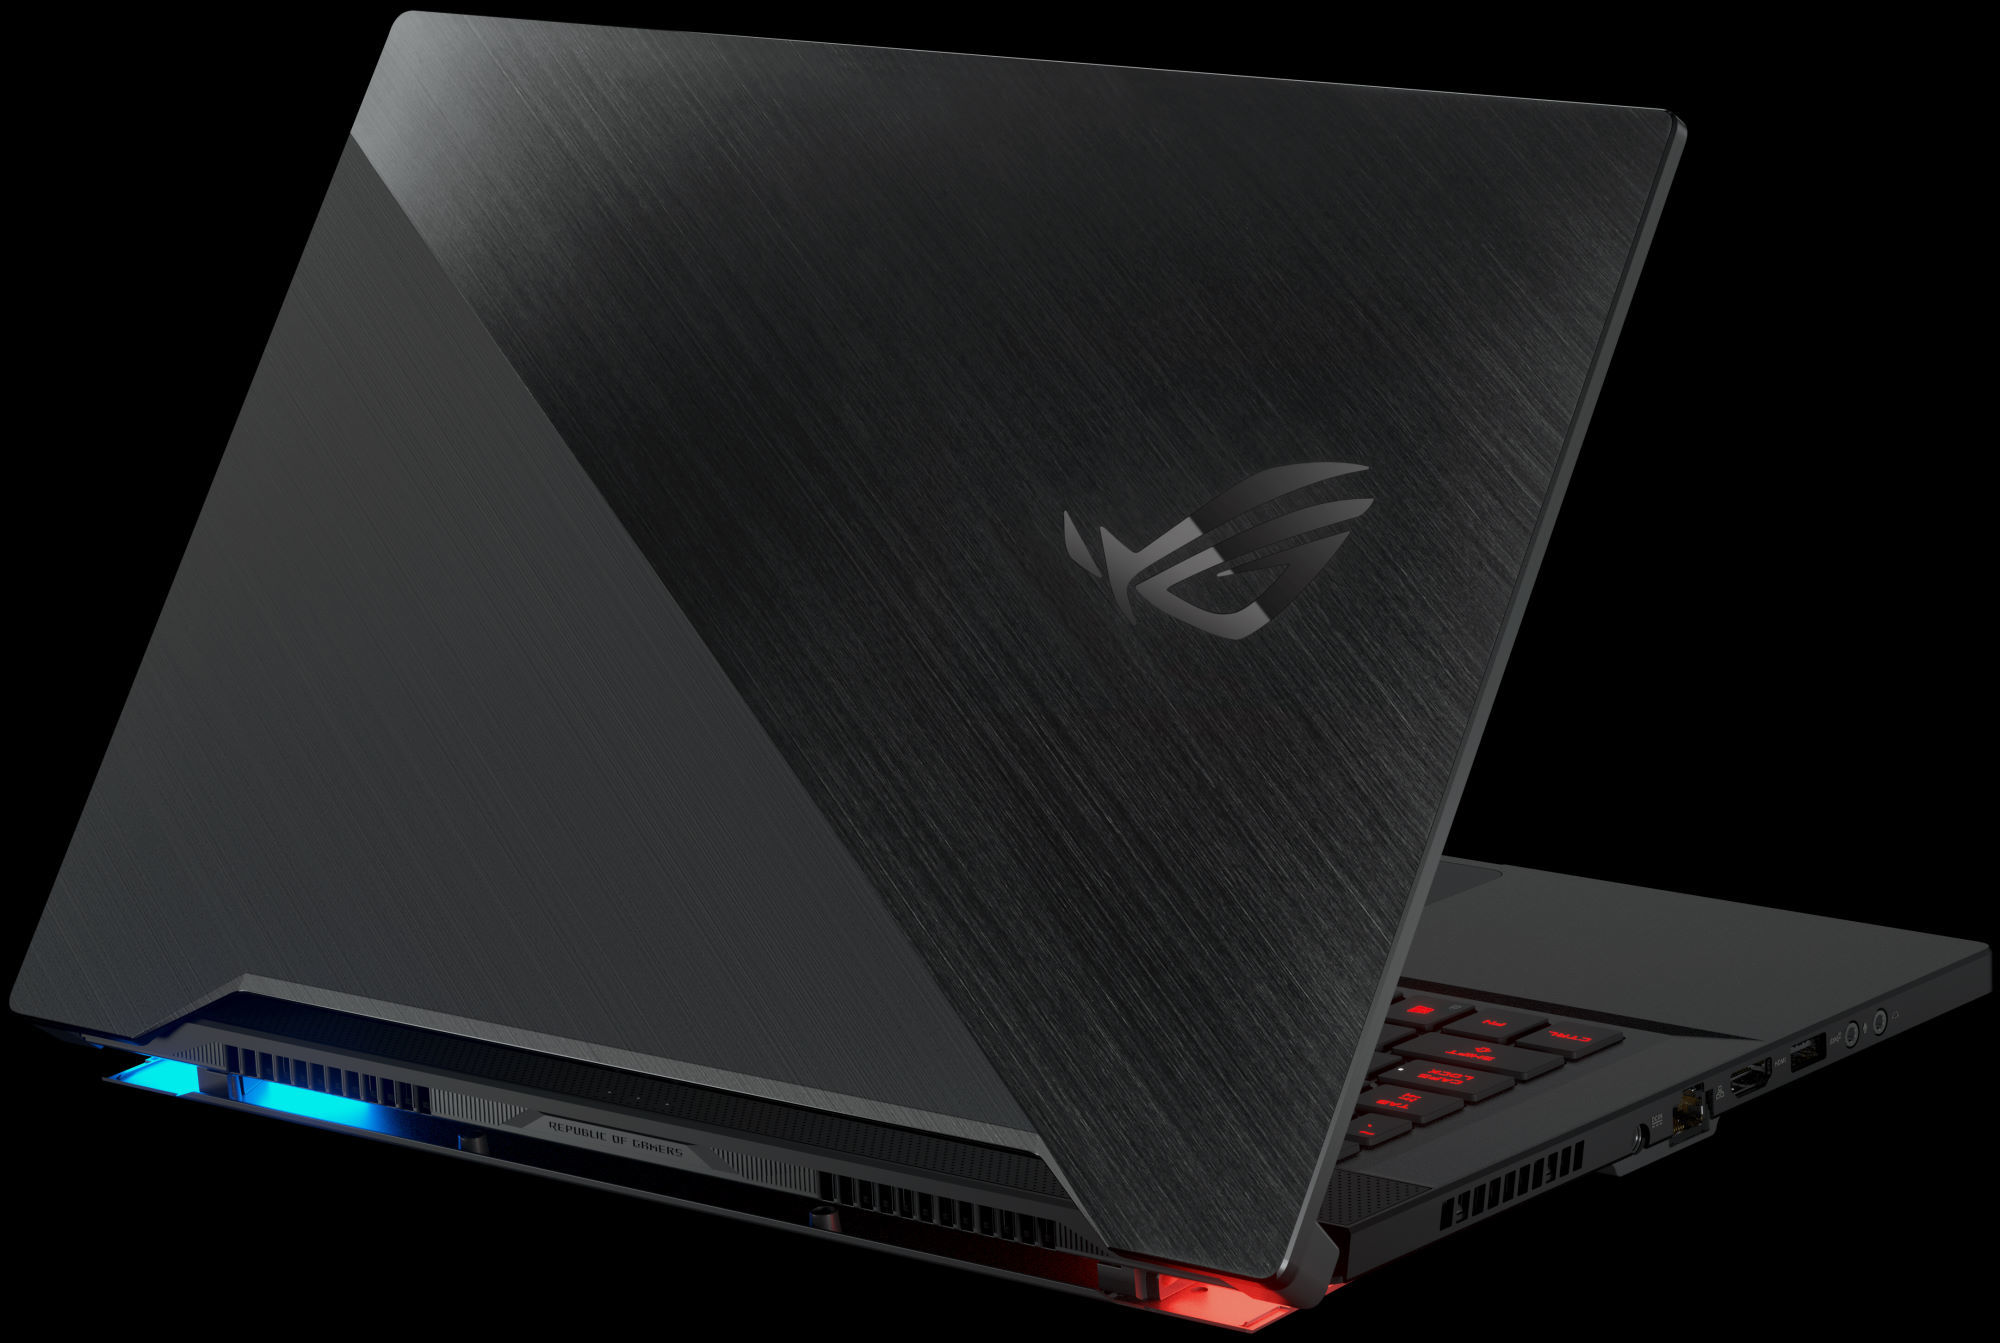 New ASUS ROG Zephyrus and Strix liquid metal cooling gaming laptops 1585818738704.jpg